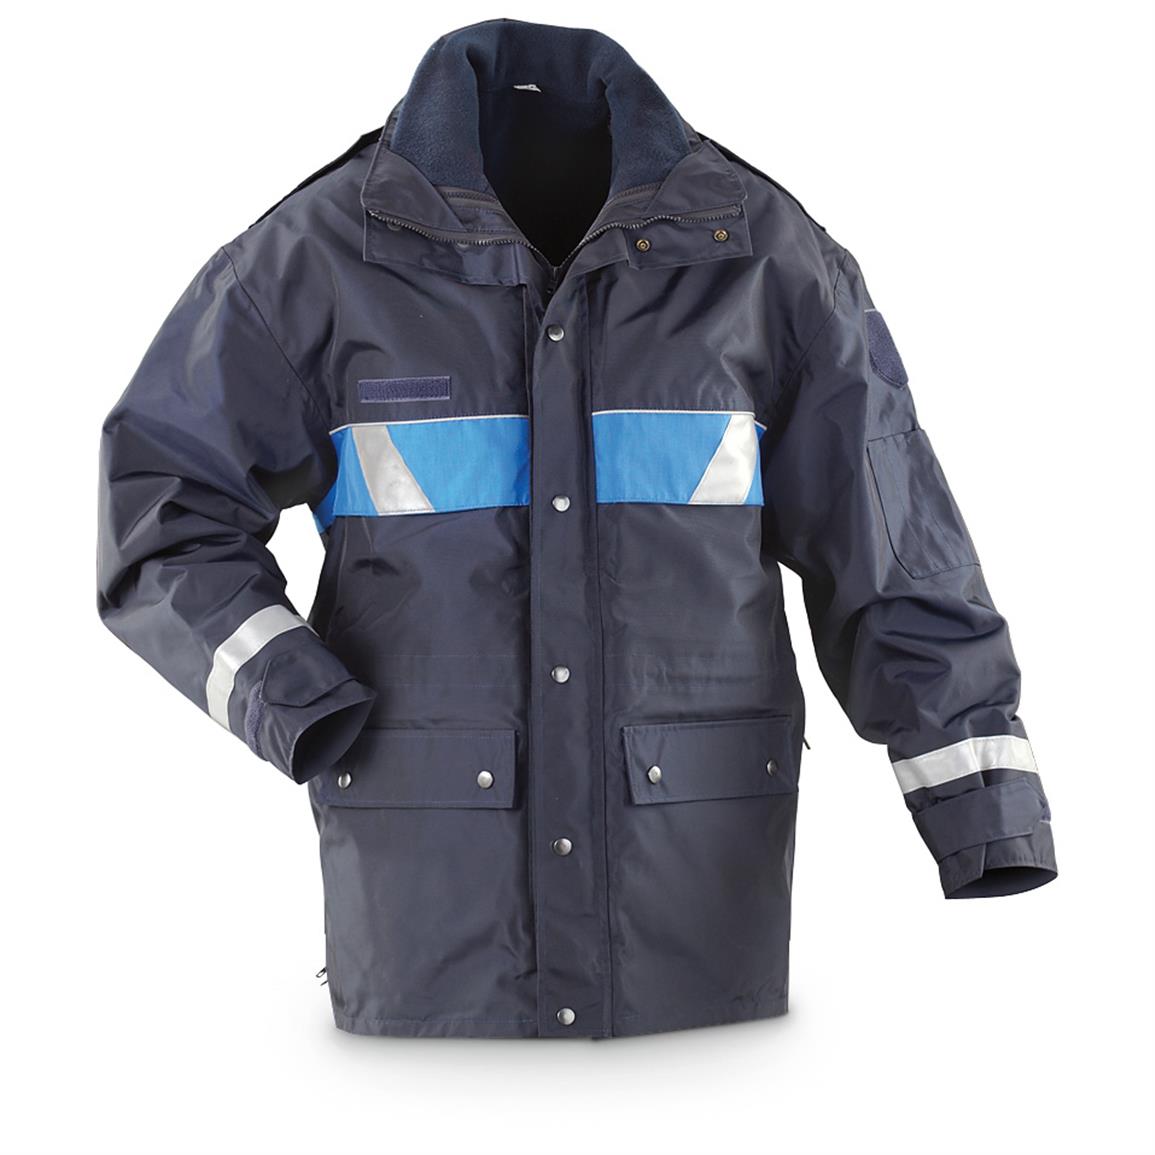 New French Motorcycle Police Waterproof Jacket with Fleece